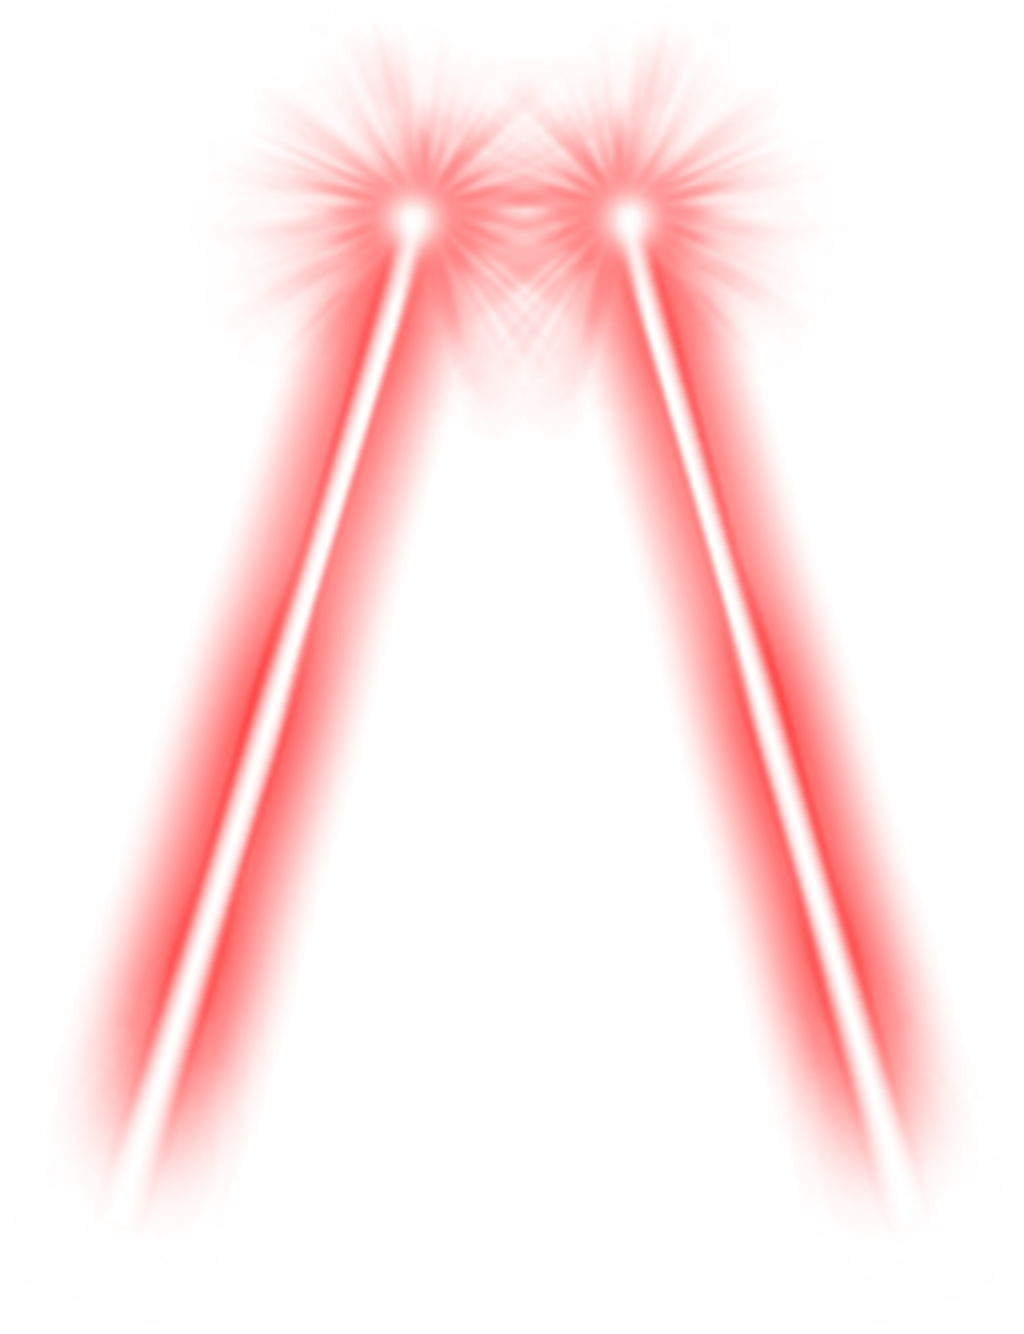 Red Light Beam PNG Transparent Image